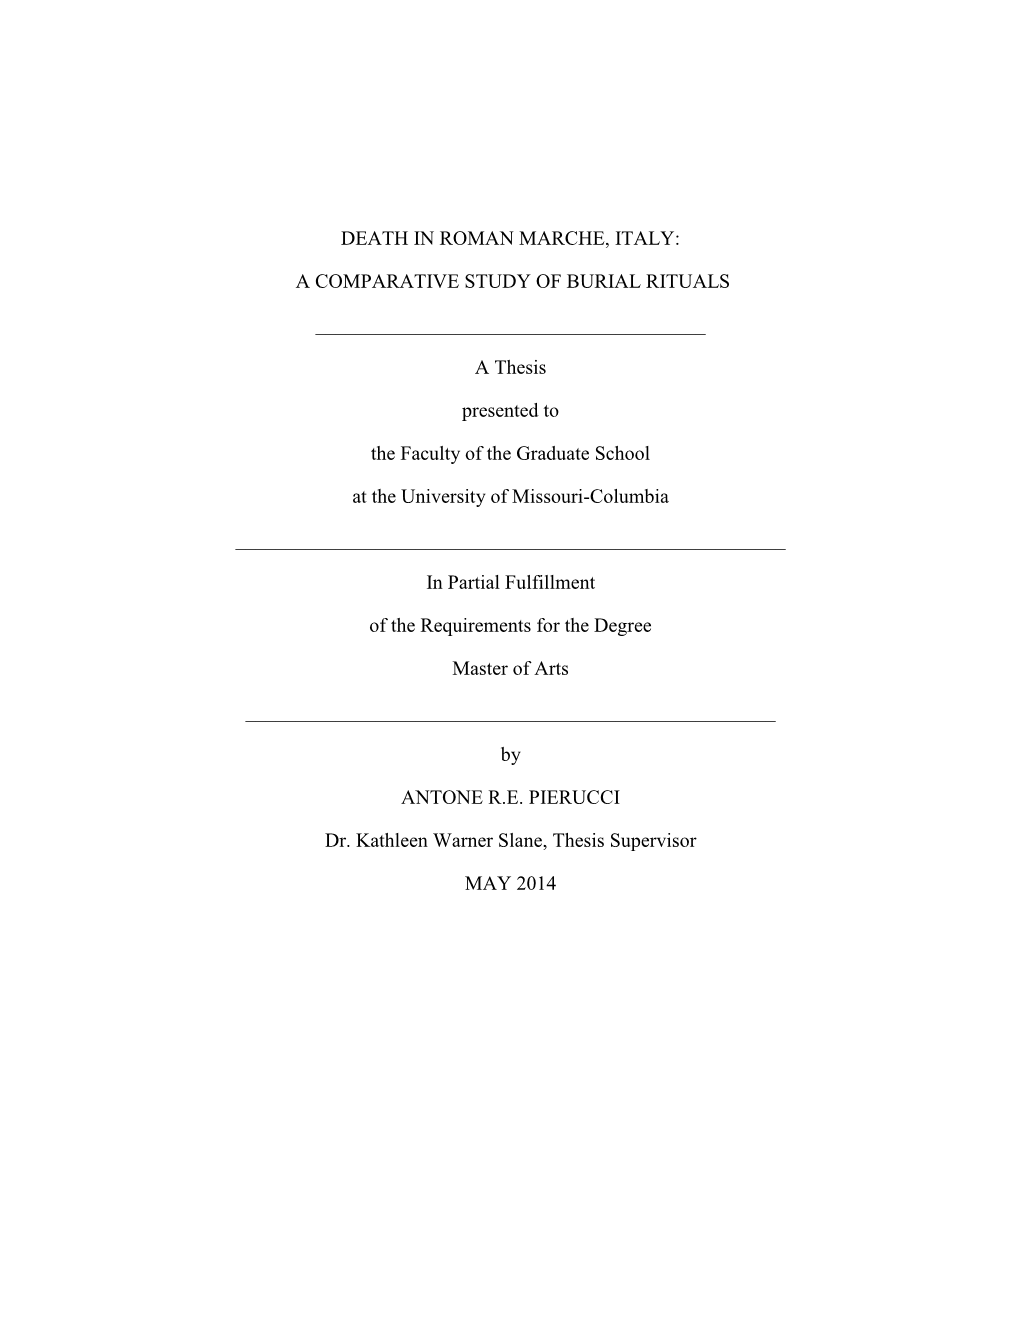 DEATH in ROMAN MARCHE, ITALY: a COMPARATIVE STUDY of BURIAL RITUALS Presented by Antone R.E